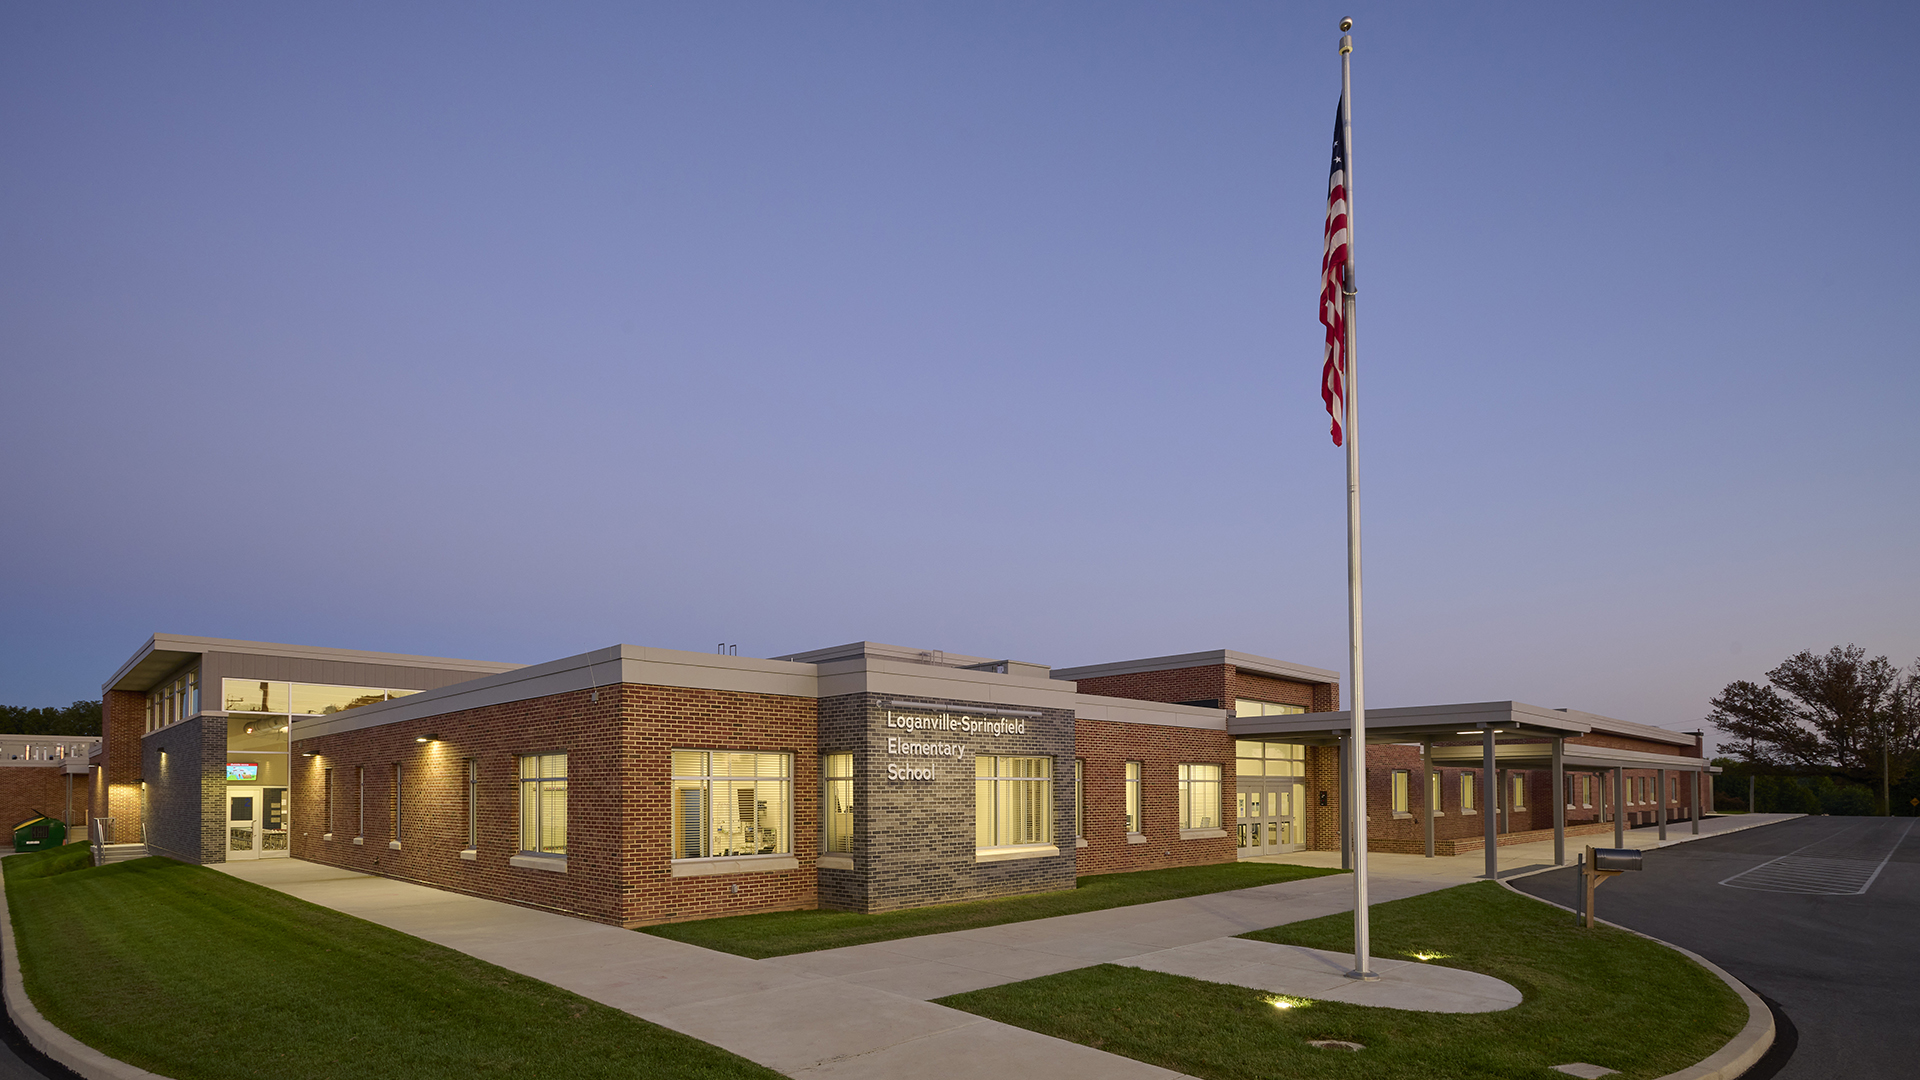 Loganville-Springfield Elementary School, Dallastown Area School District